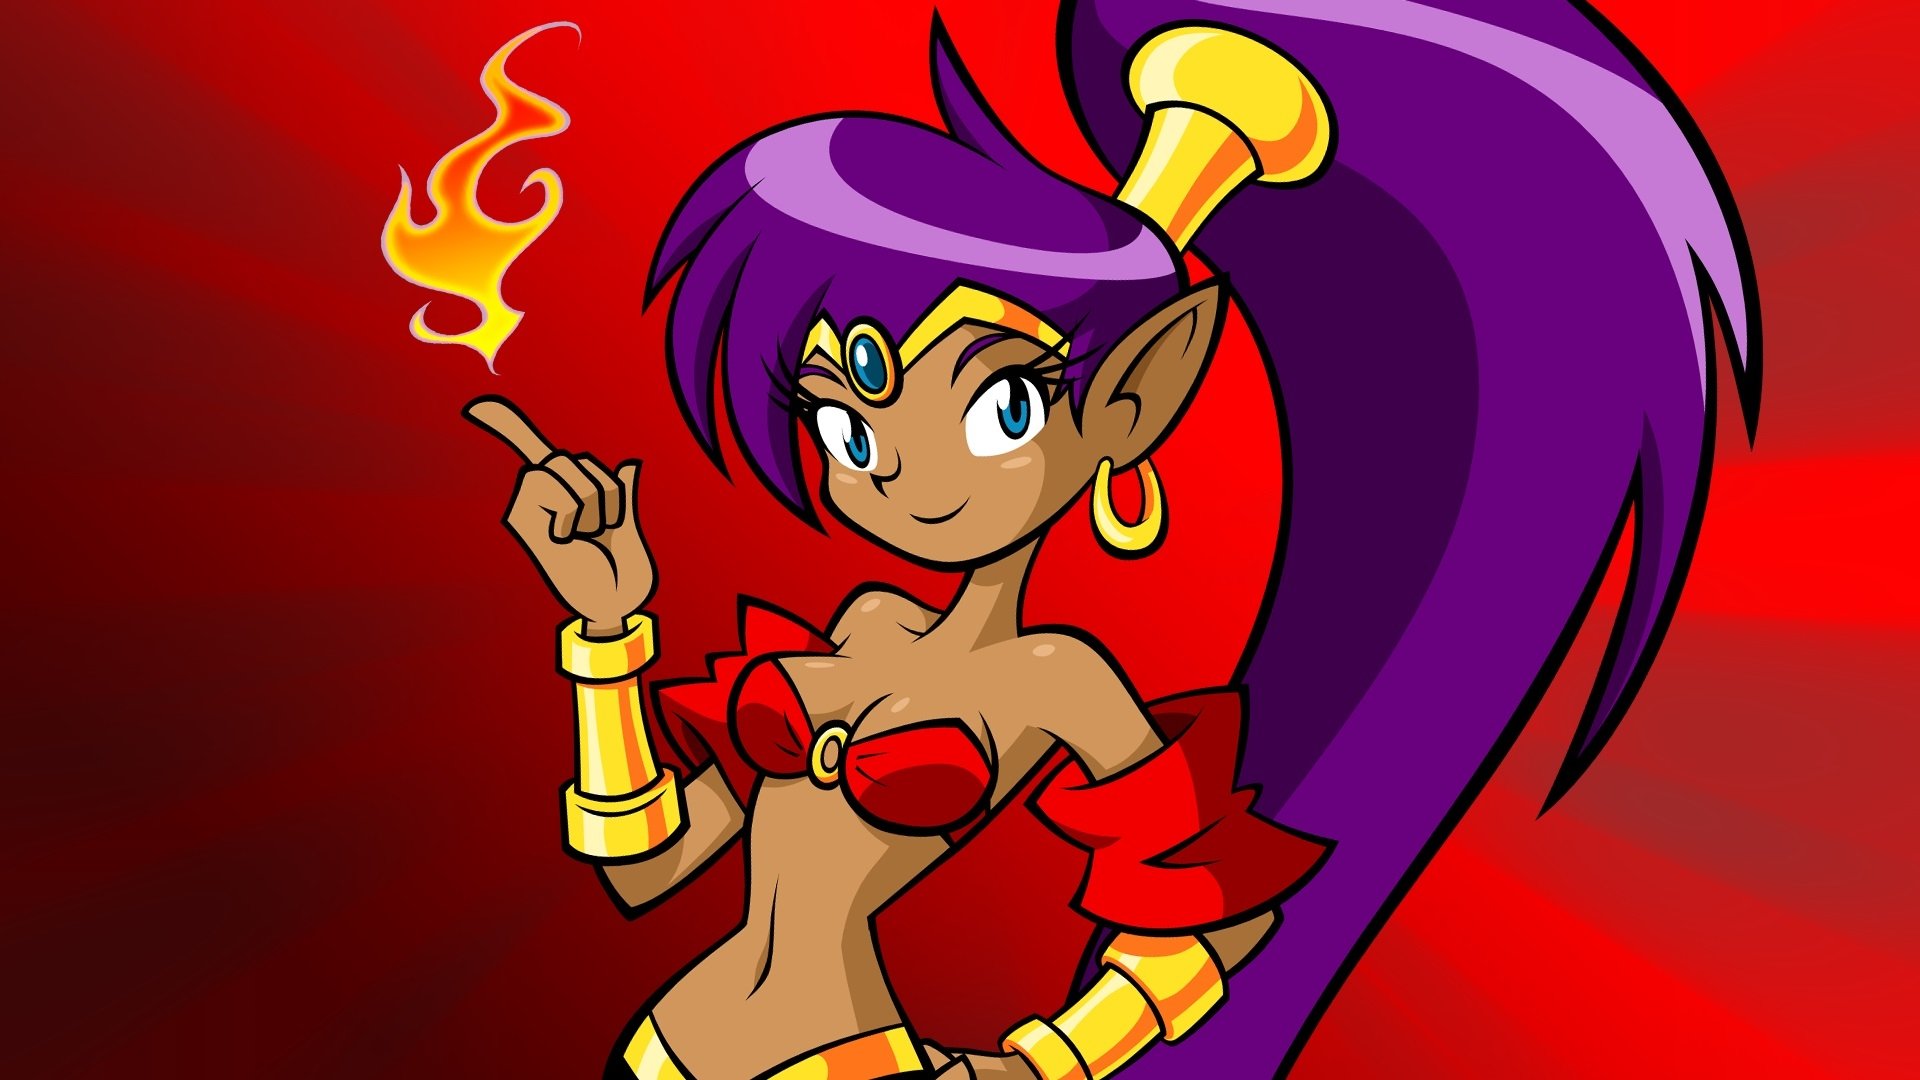 Shantae Riskys Revenge HD Wallpaper Background Image 1920x1080.